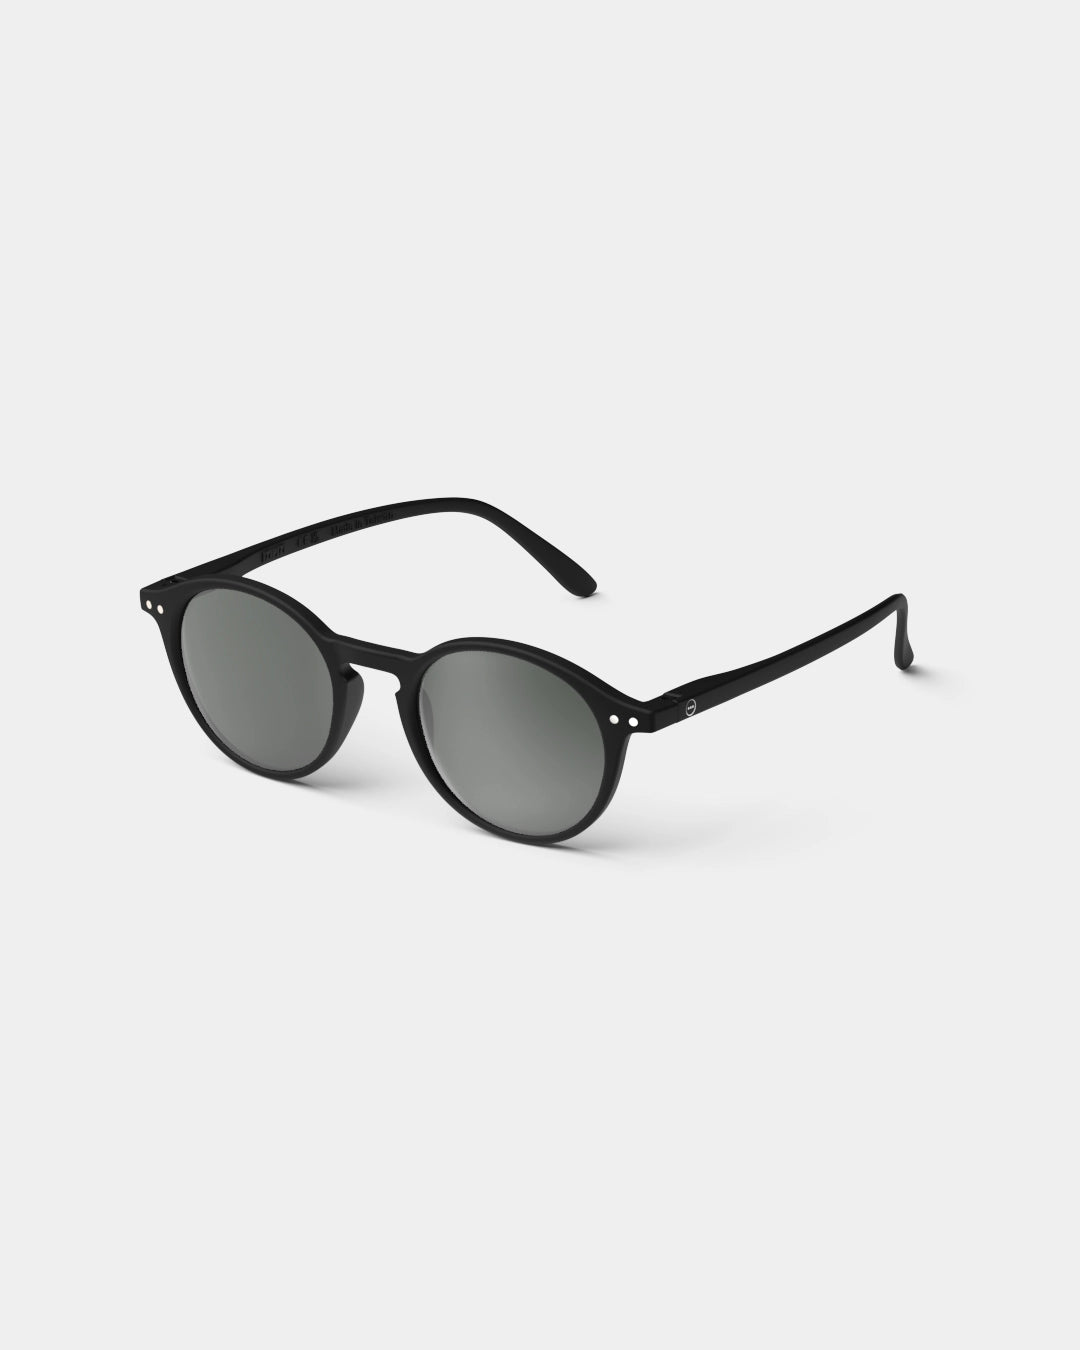 Unisex Reading Sunglasses - Style D - Black 3.0